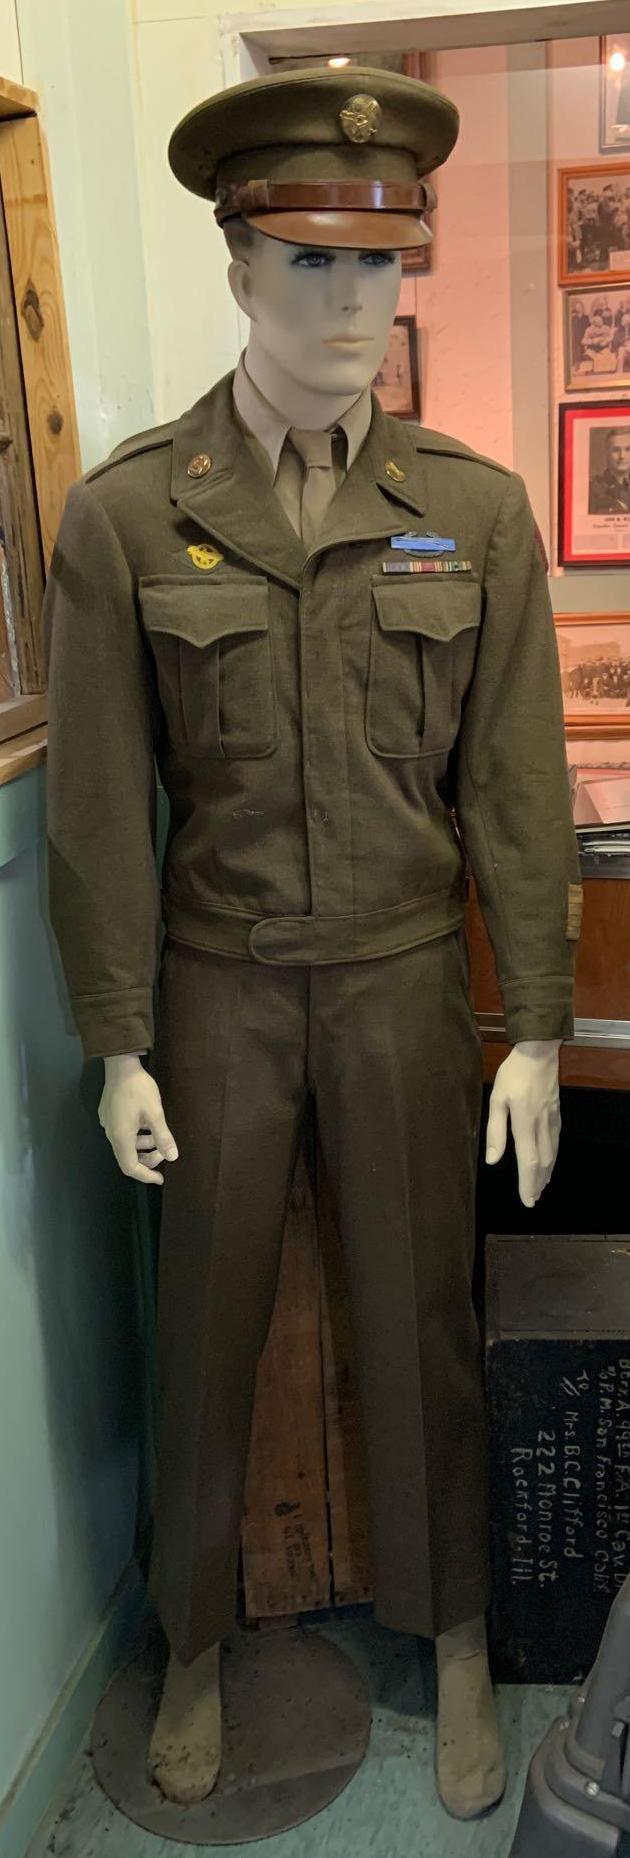 WW2 US 5th Army infantry uniform